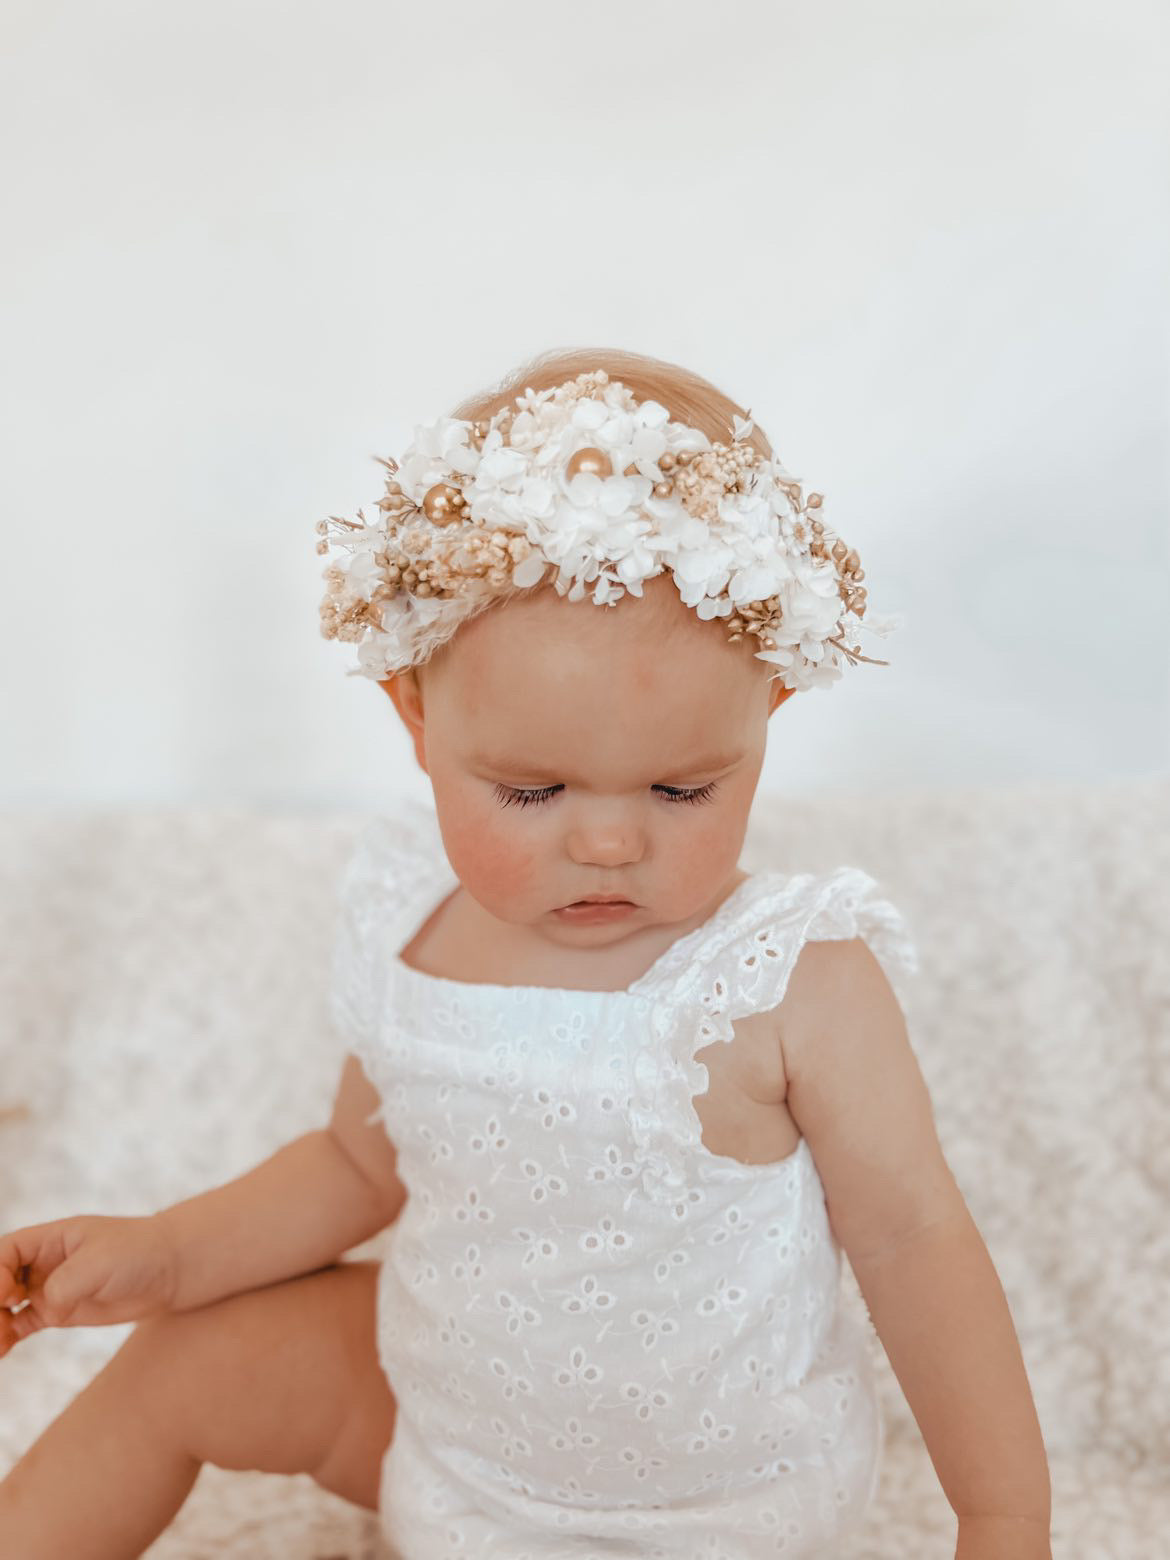 Everlasting White & gold Christmas Berry newborn flowercrown - stretchy soft elastic headband.